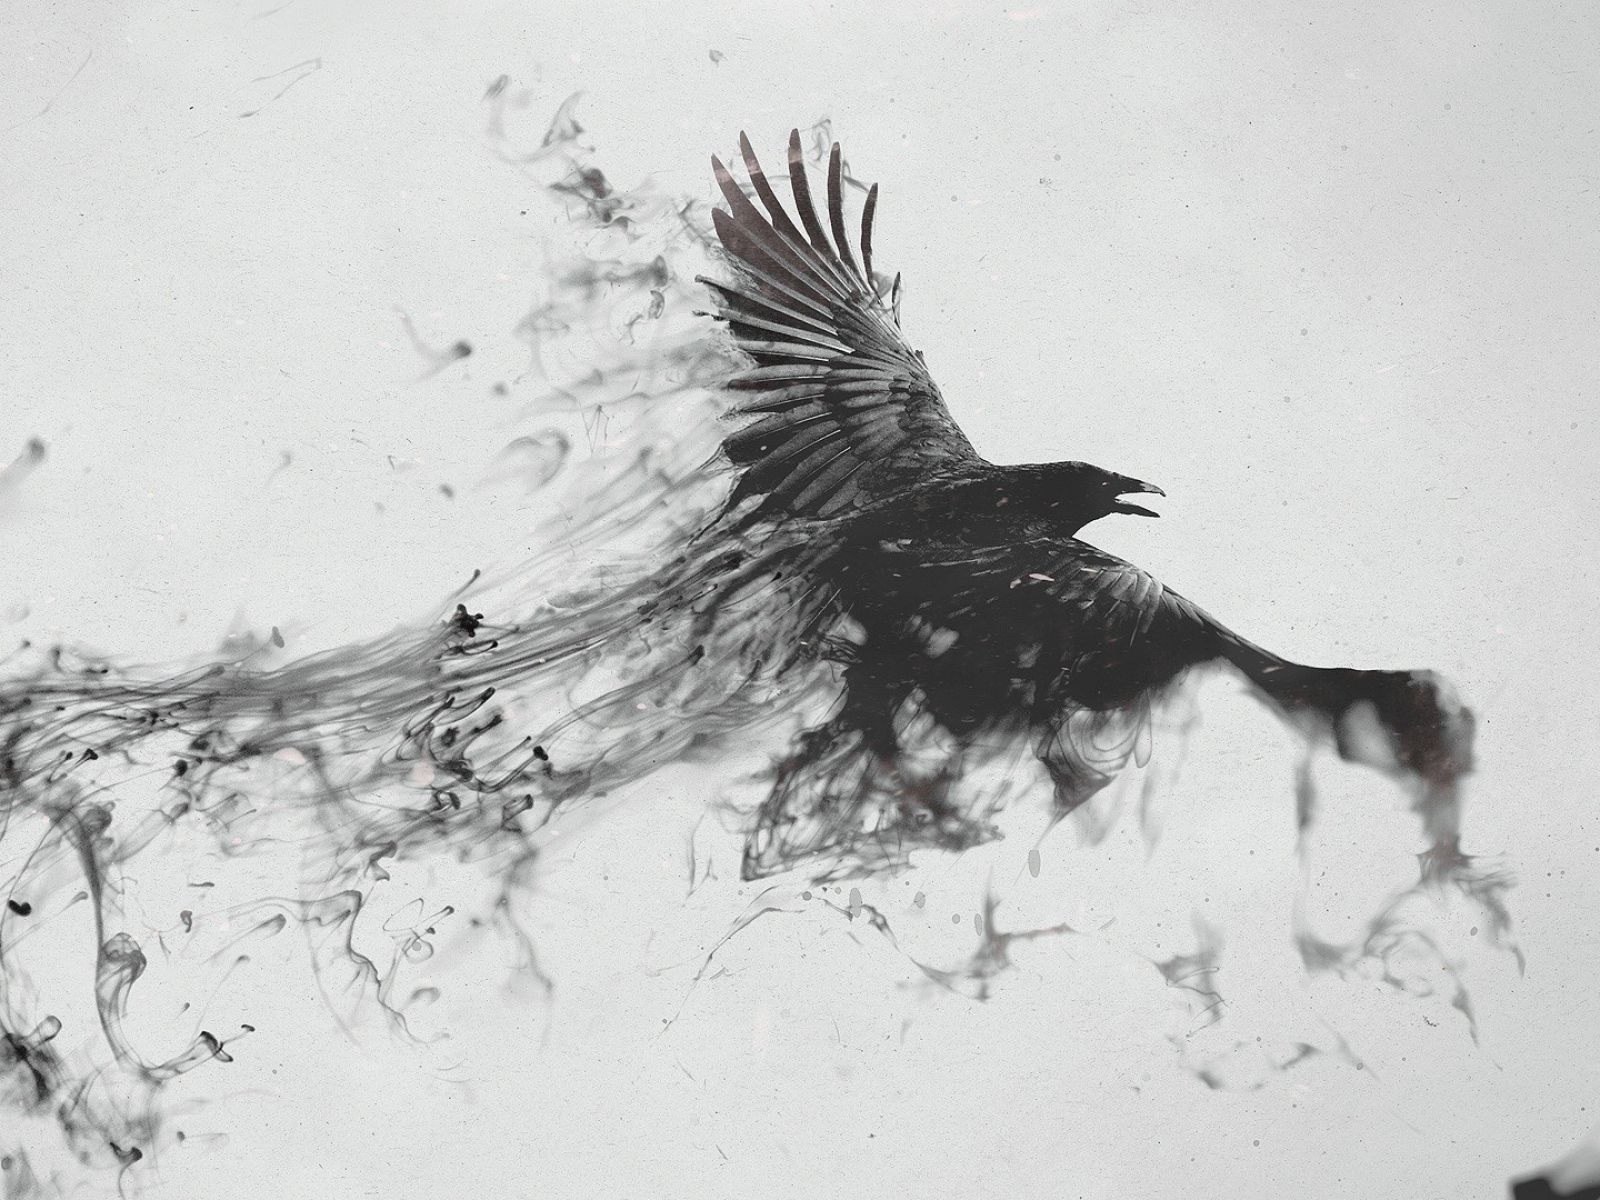 Download Wallpaper 1600x1200 Raven, Bird, Flying, Smoke, Black white 1600x1200 HD Background. Smoke art, Crow tattoo, Raven flying